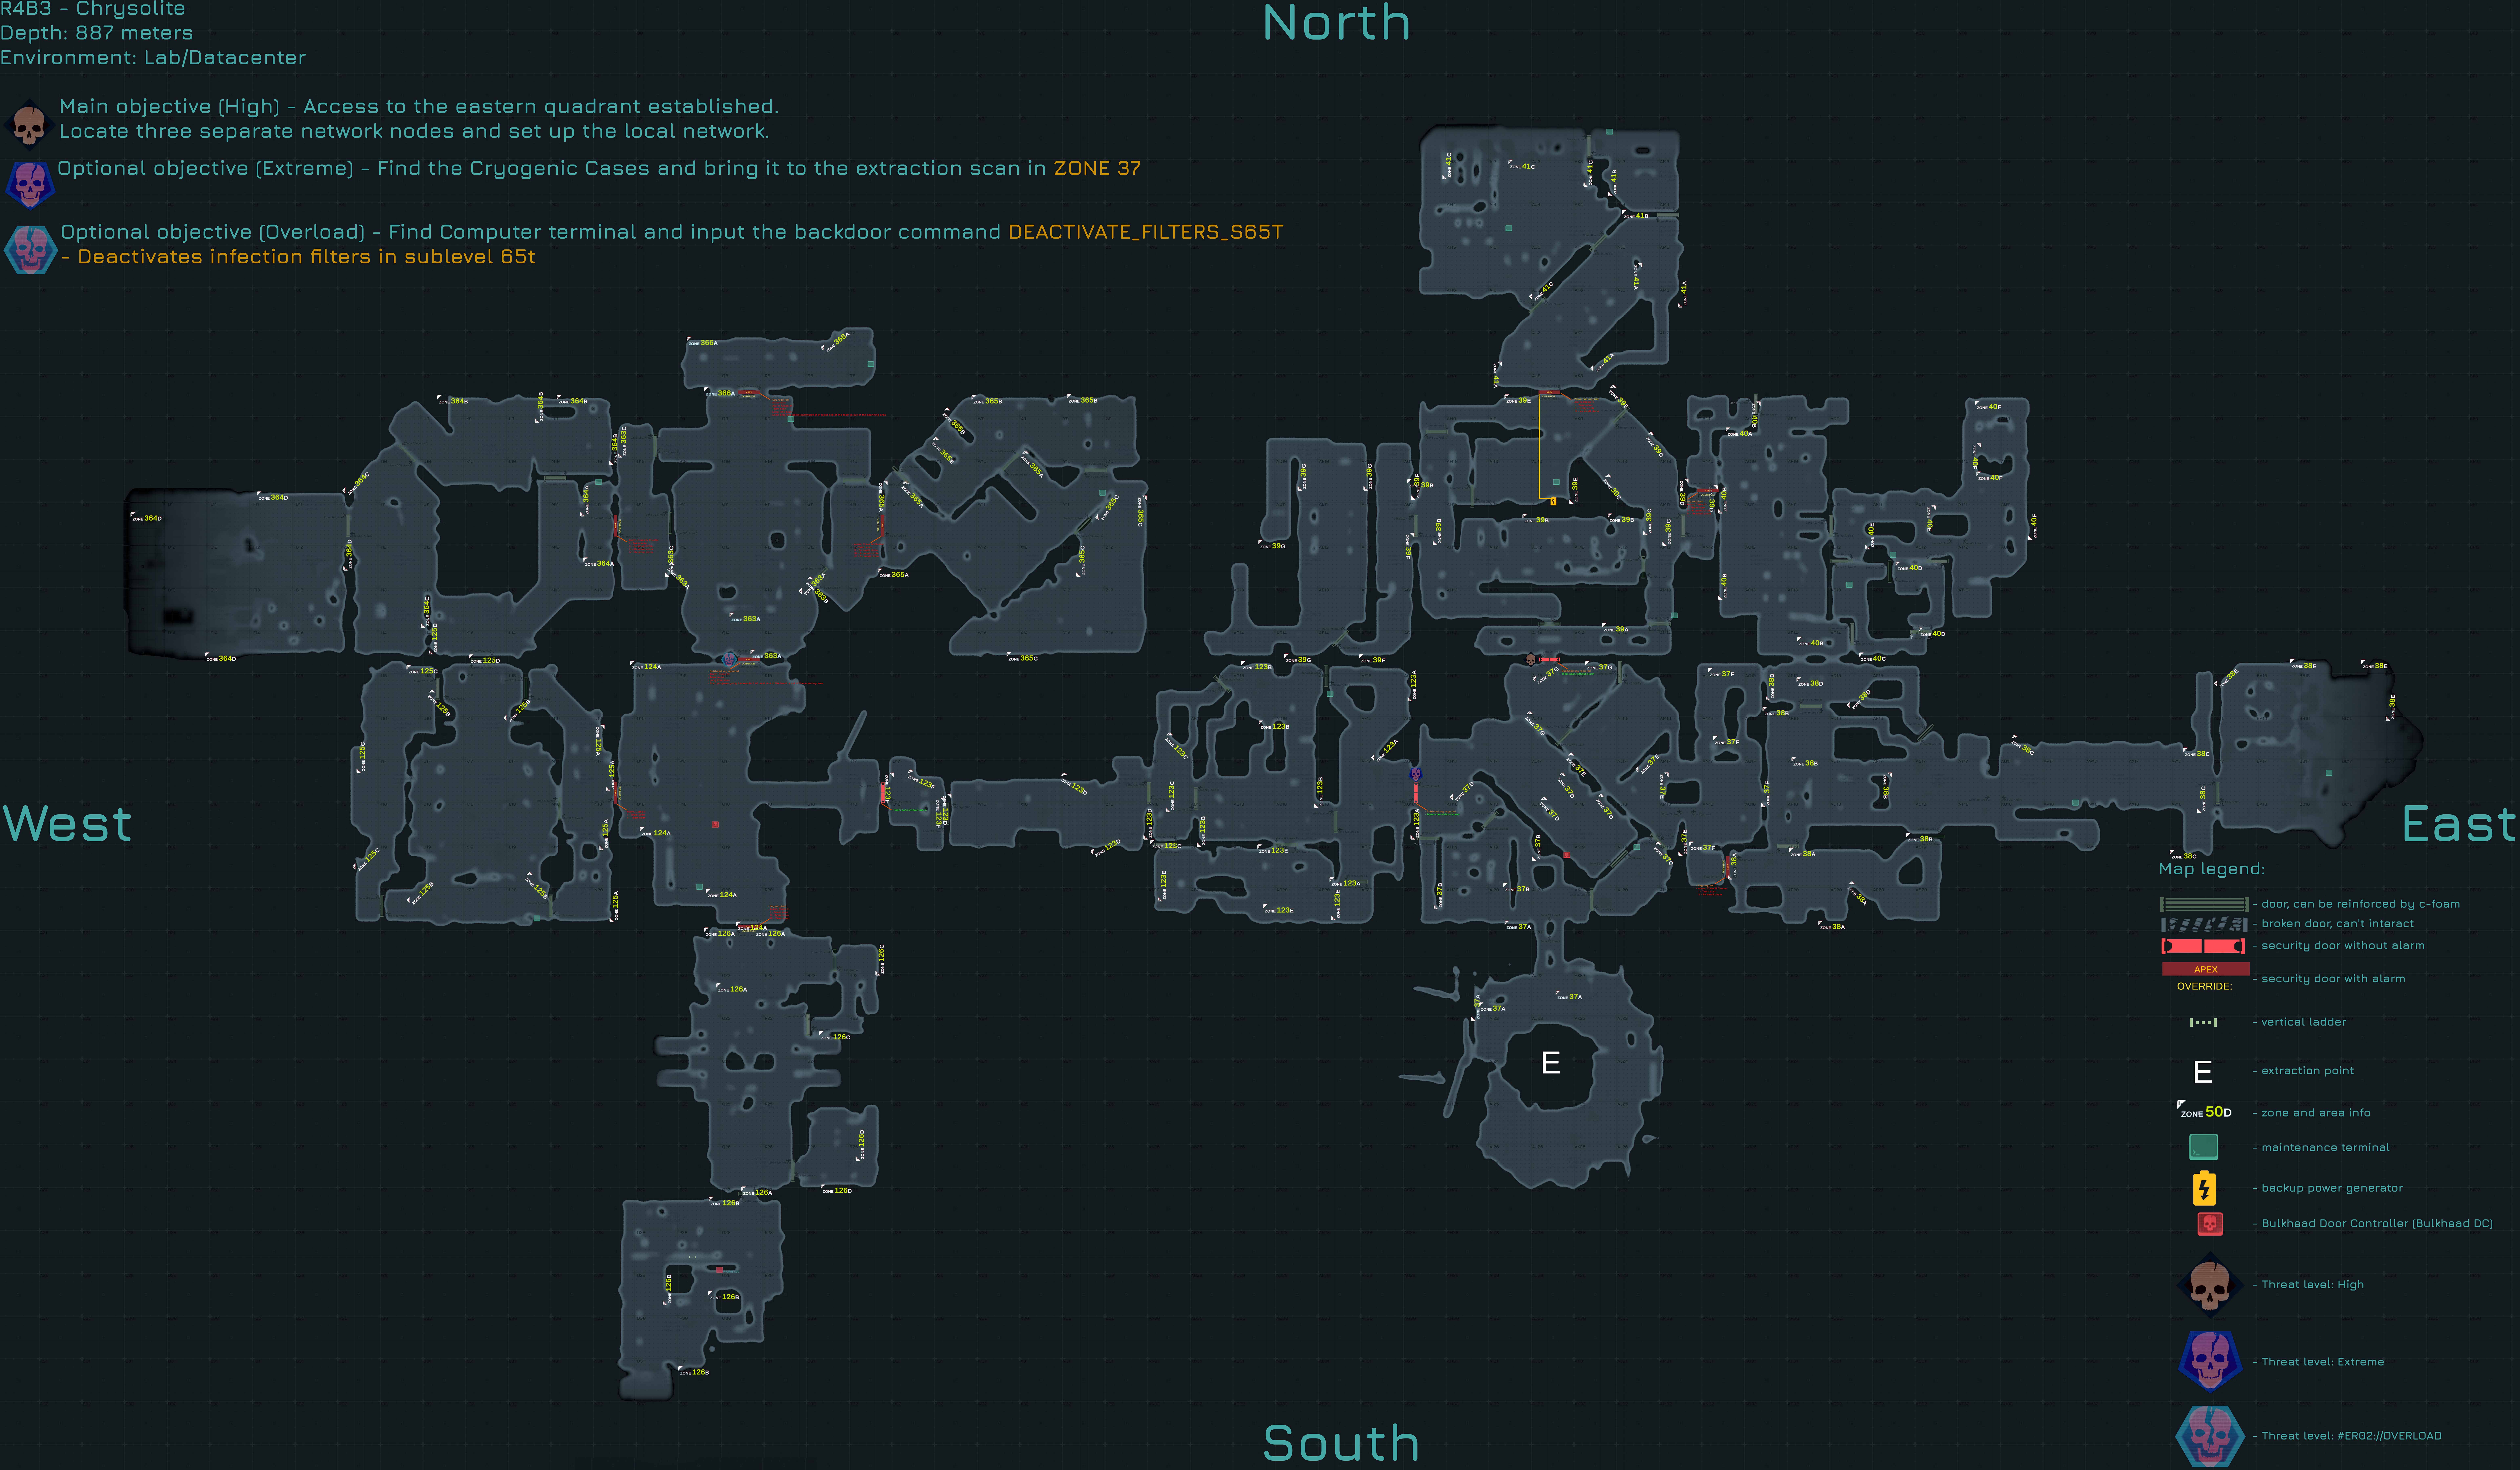 GTFO Full Maps + Images Guide Rundown 004 maps - R4B3